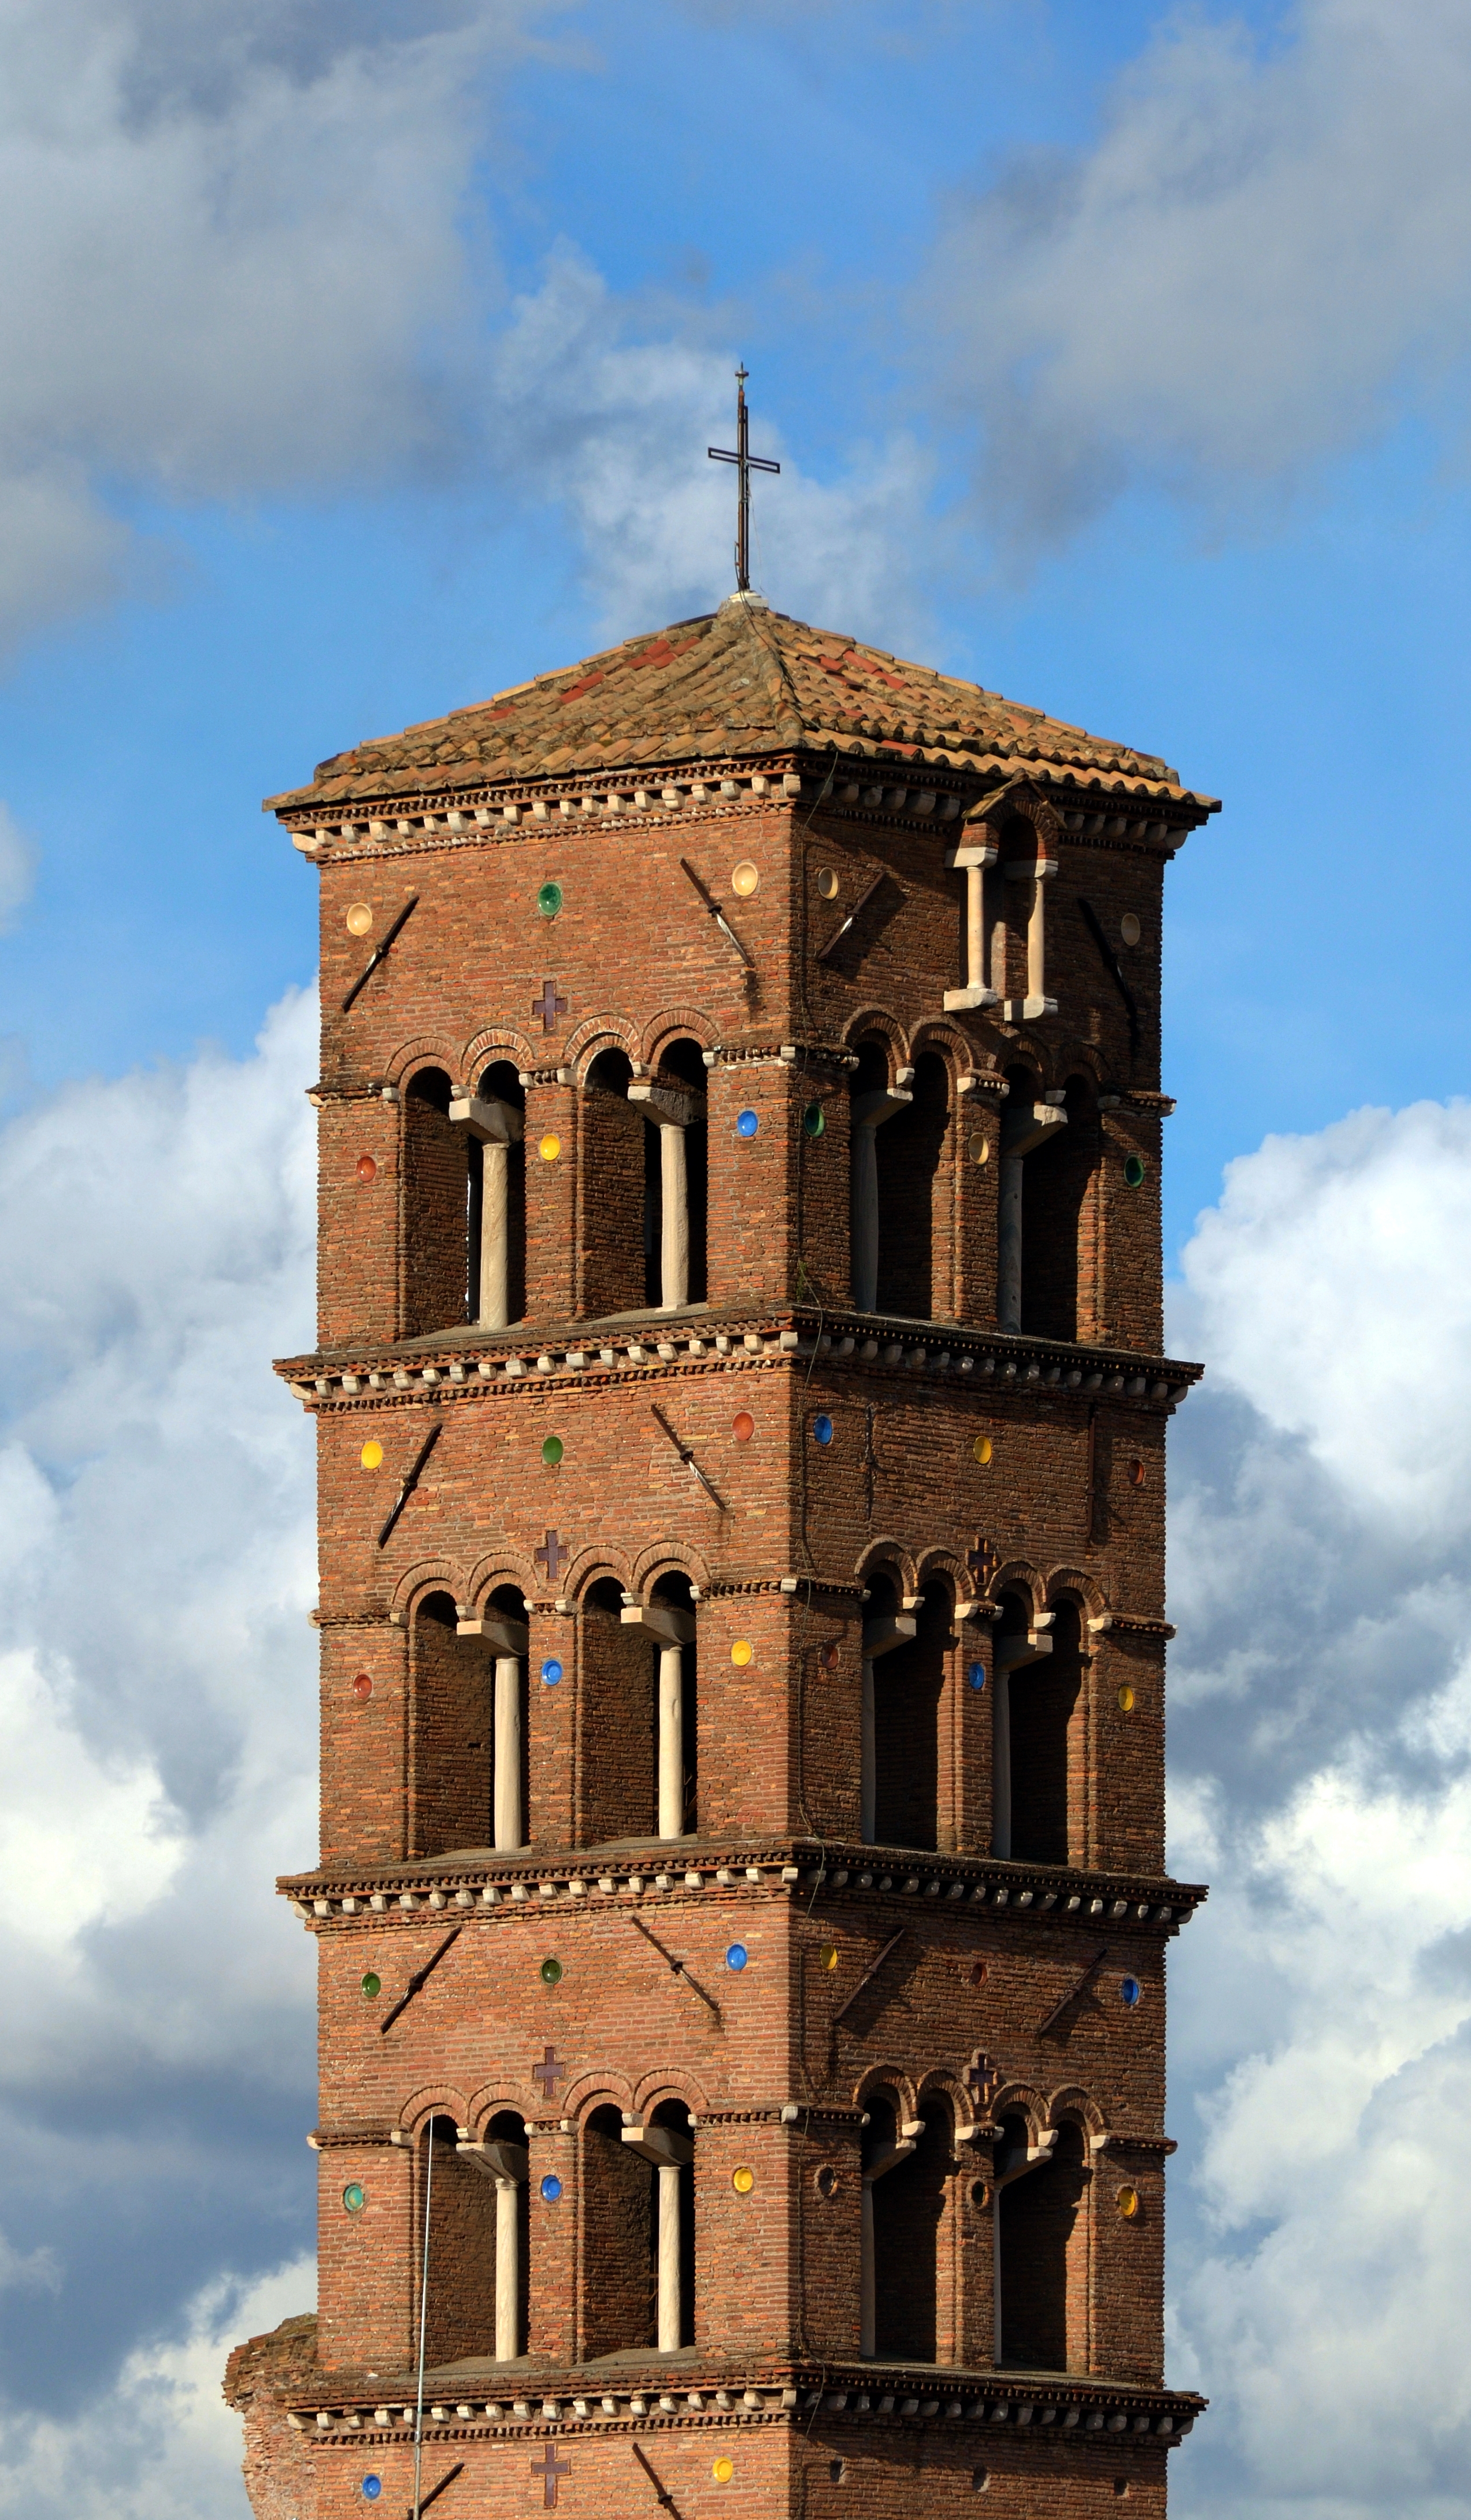 Tower Bell of Church of Santa Francesca Romana